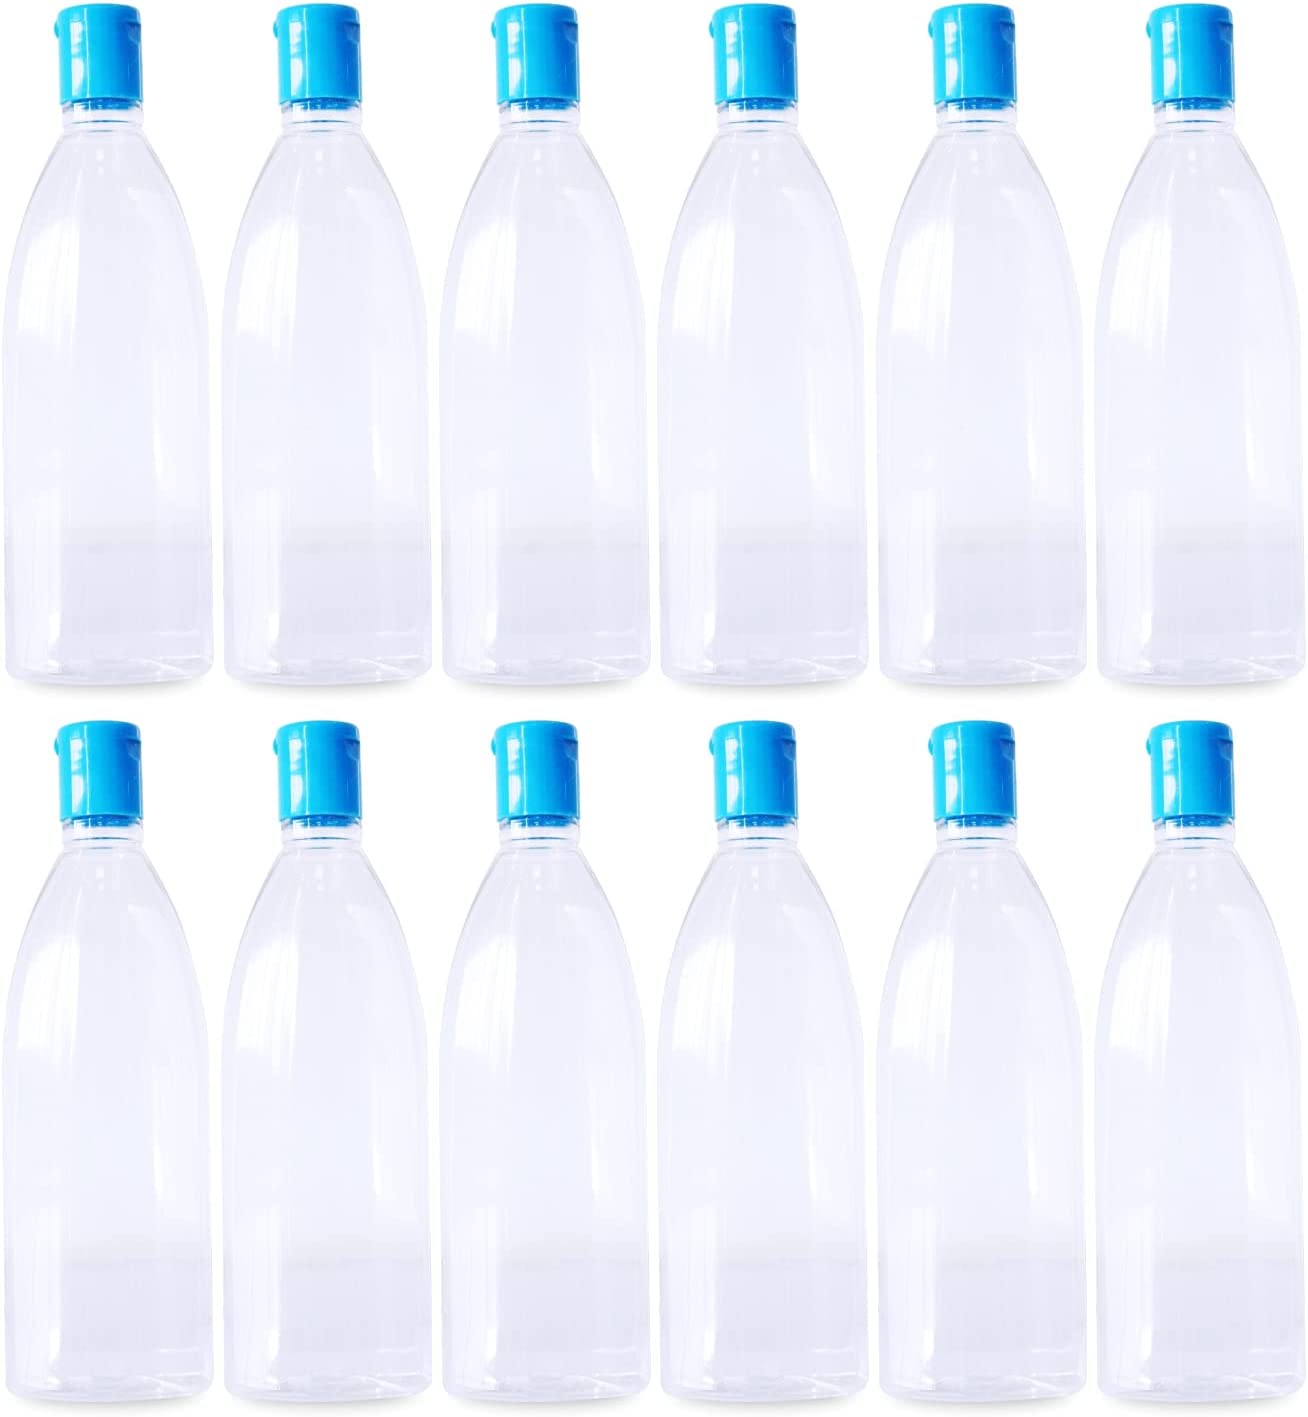 Shoprythm Myoc,United States Pack of 12 MYOC Clear Plastic Empty Squeeze Bottle with Disc Top Flip Cap Refillable Reusable